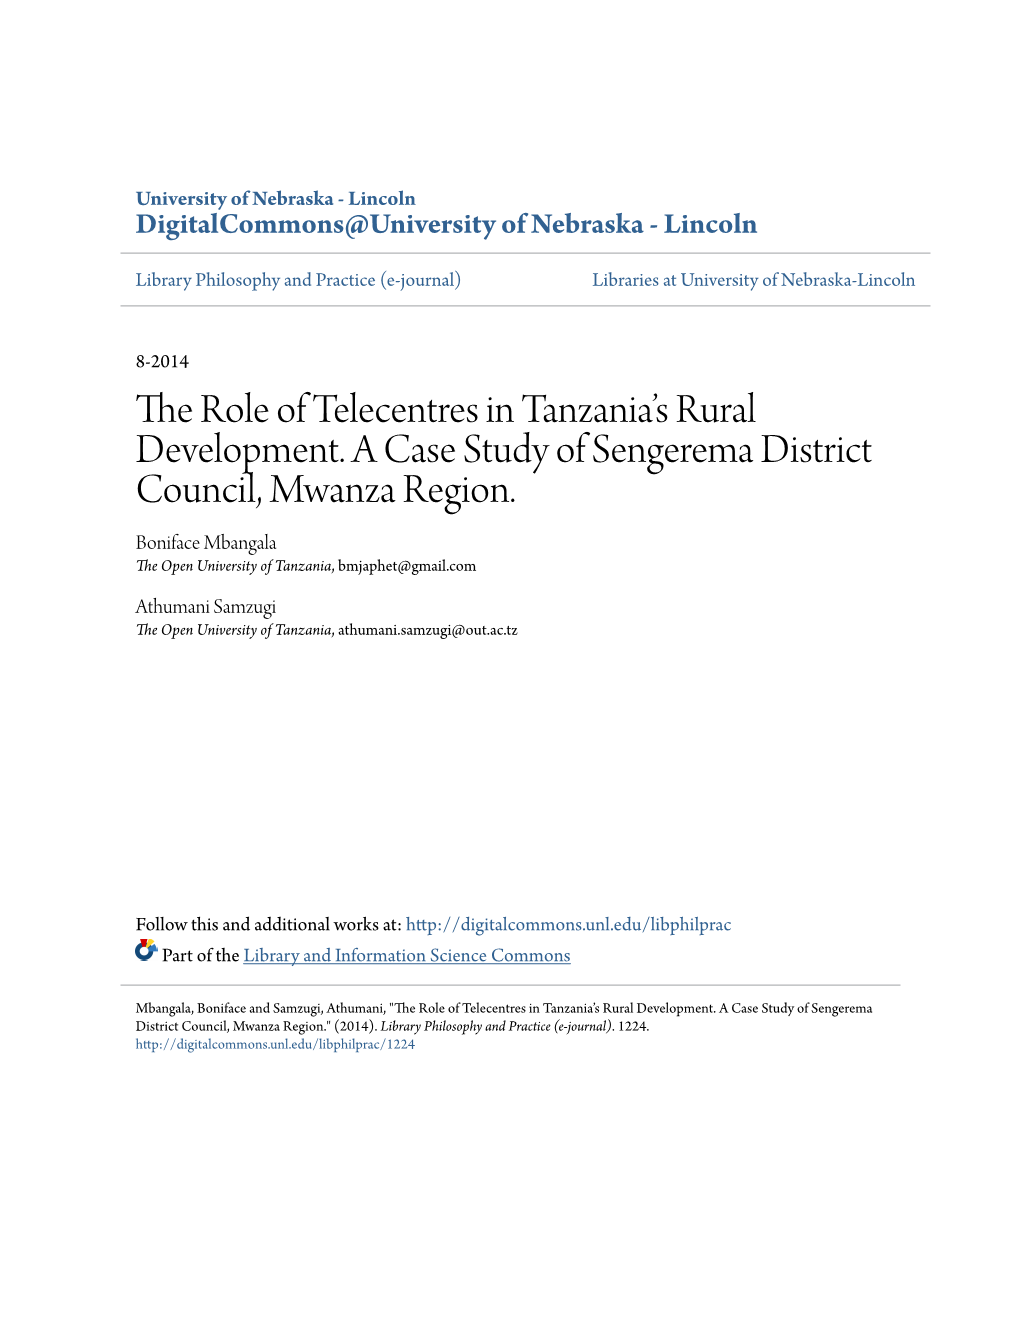 The Role of Telecentres in Tanzania's Rural Development. a Case Study